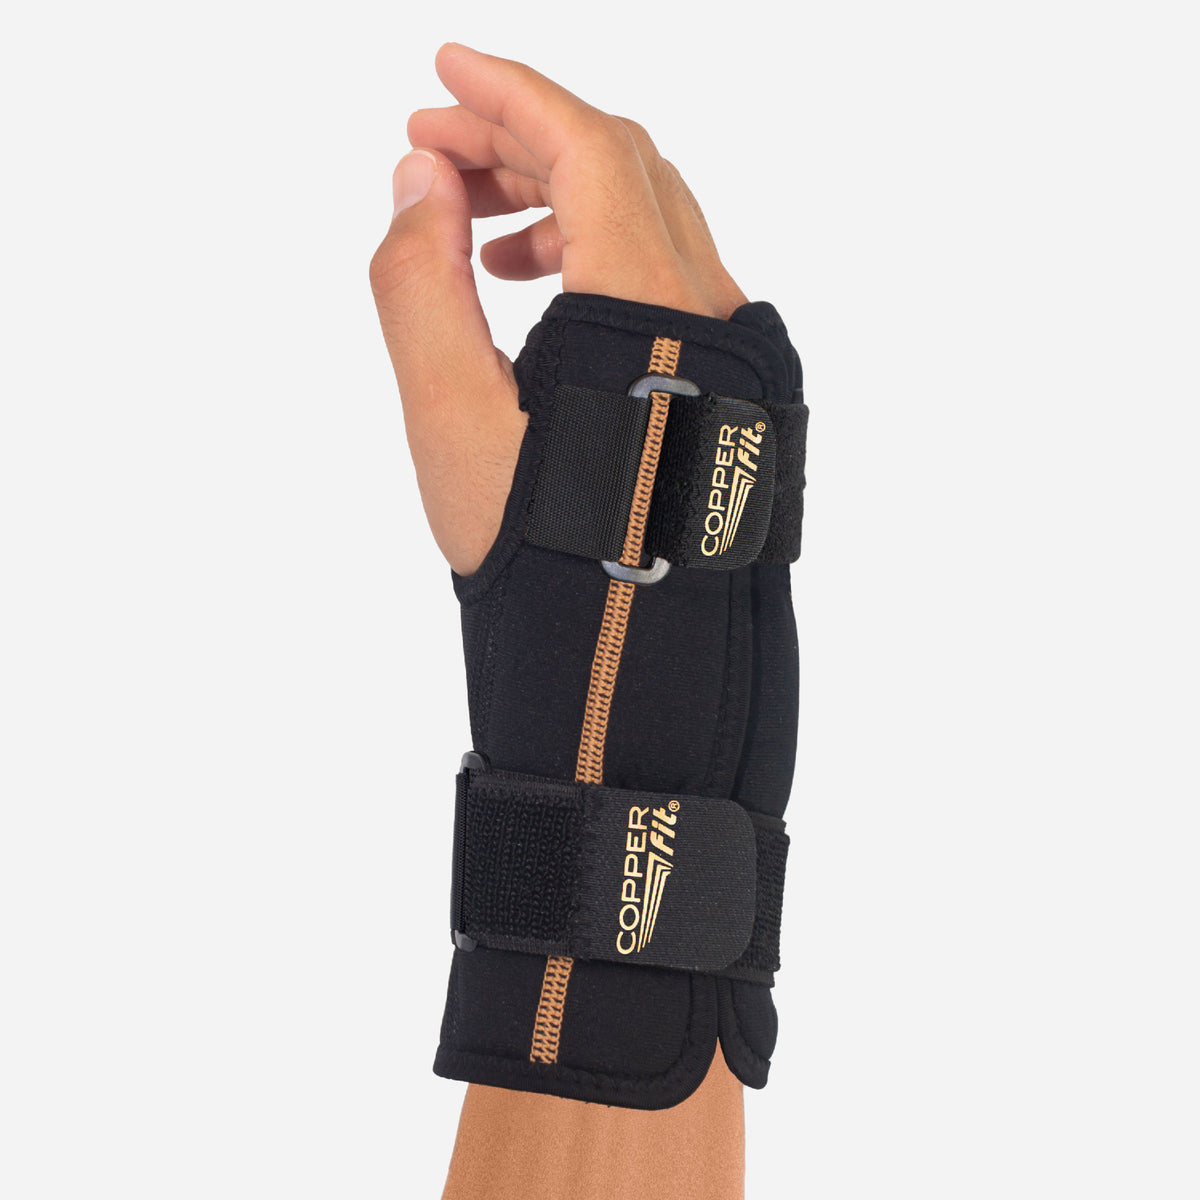 Copper Fit Health Unisex Reversible Wrist Brace with Stabilizer, Adjustable